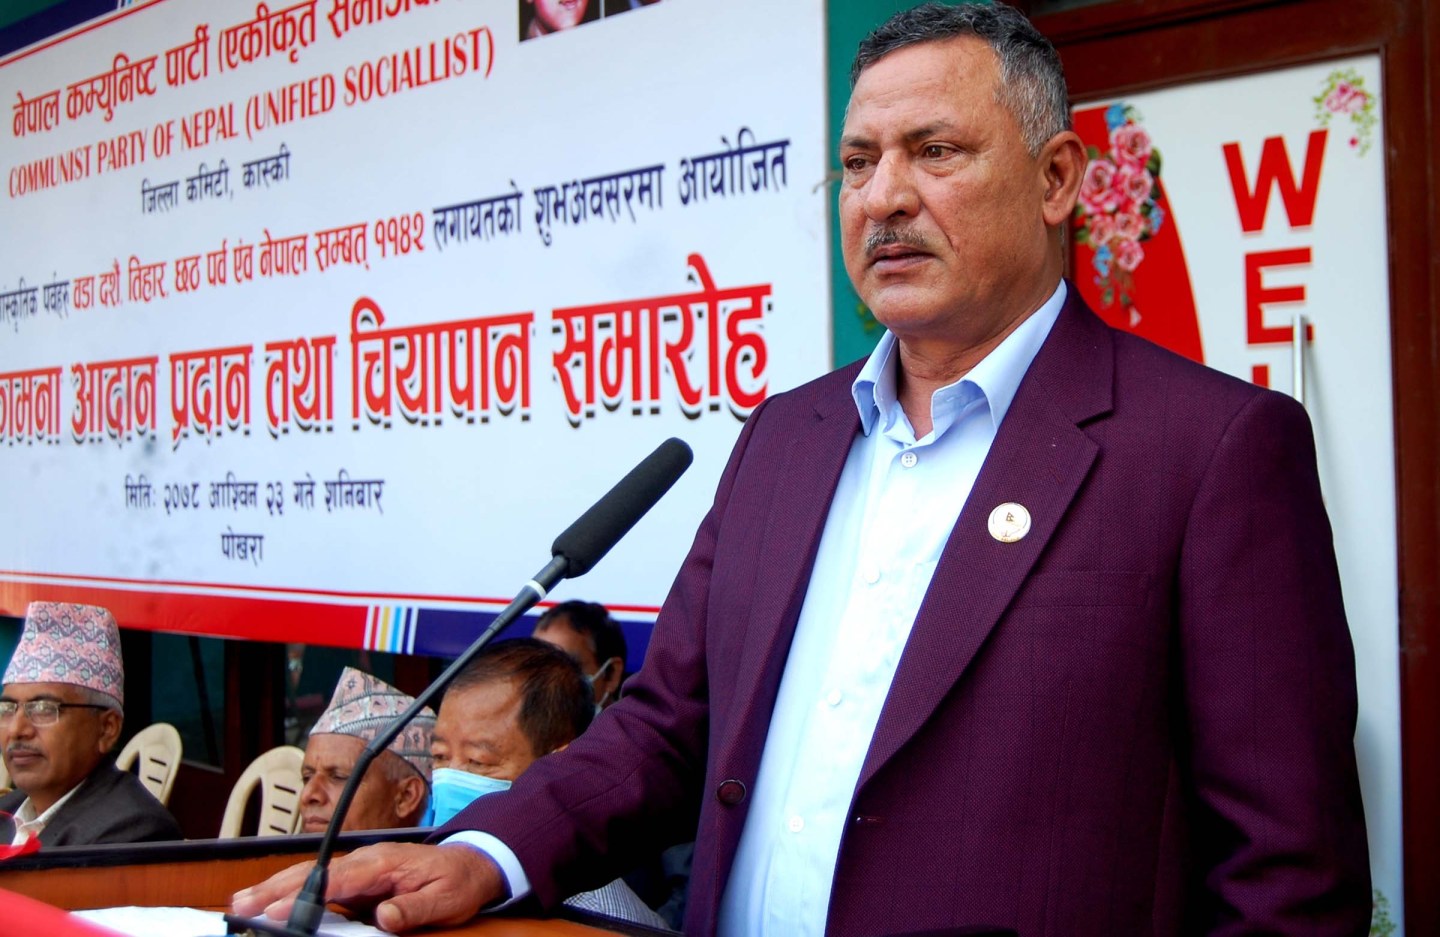 Unified Socialist leader Khatiwada manhandled in Makawanpur election gathering